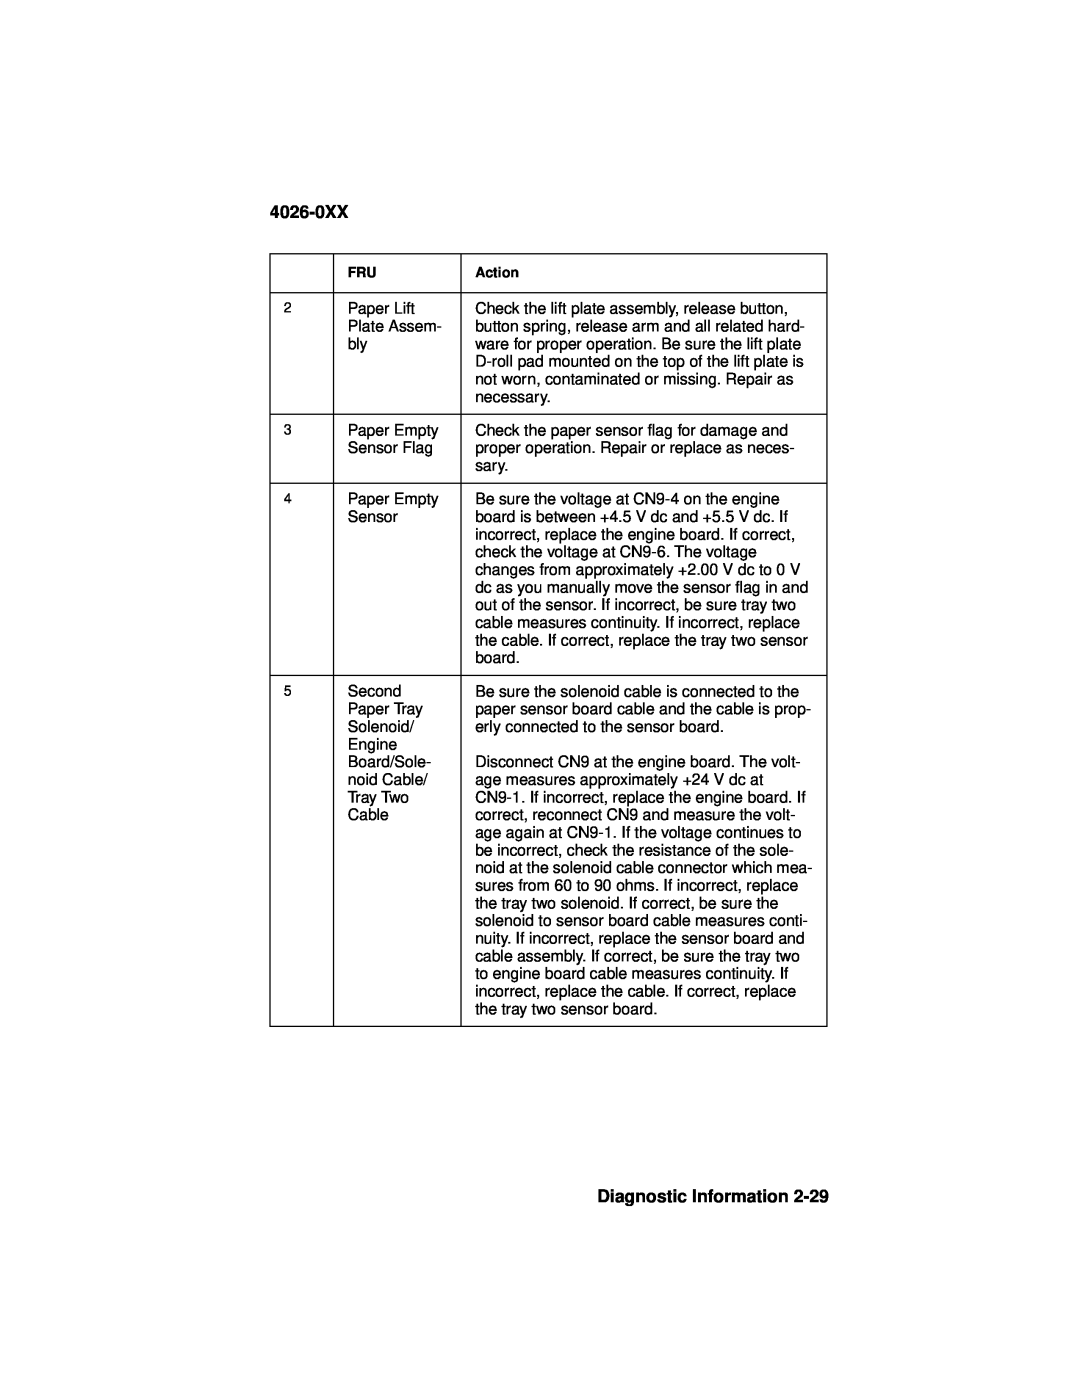 Lexmark 4026-0XX manual Diagnostic Information, Paper Lift 